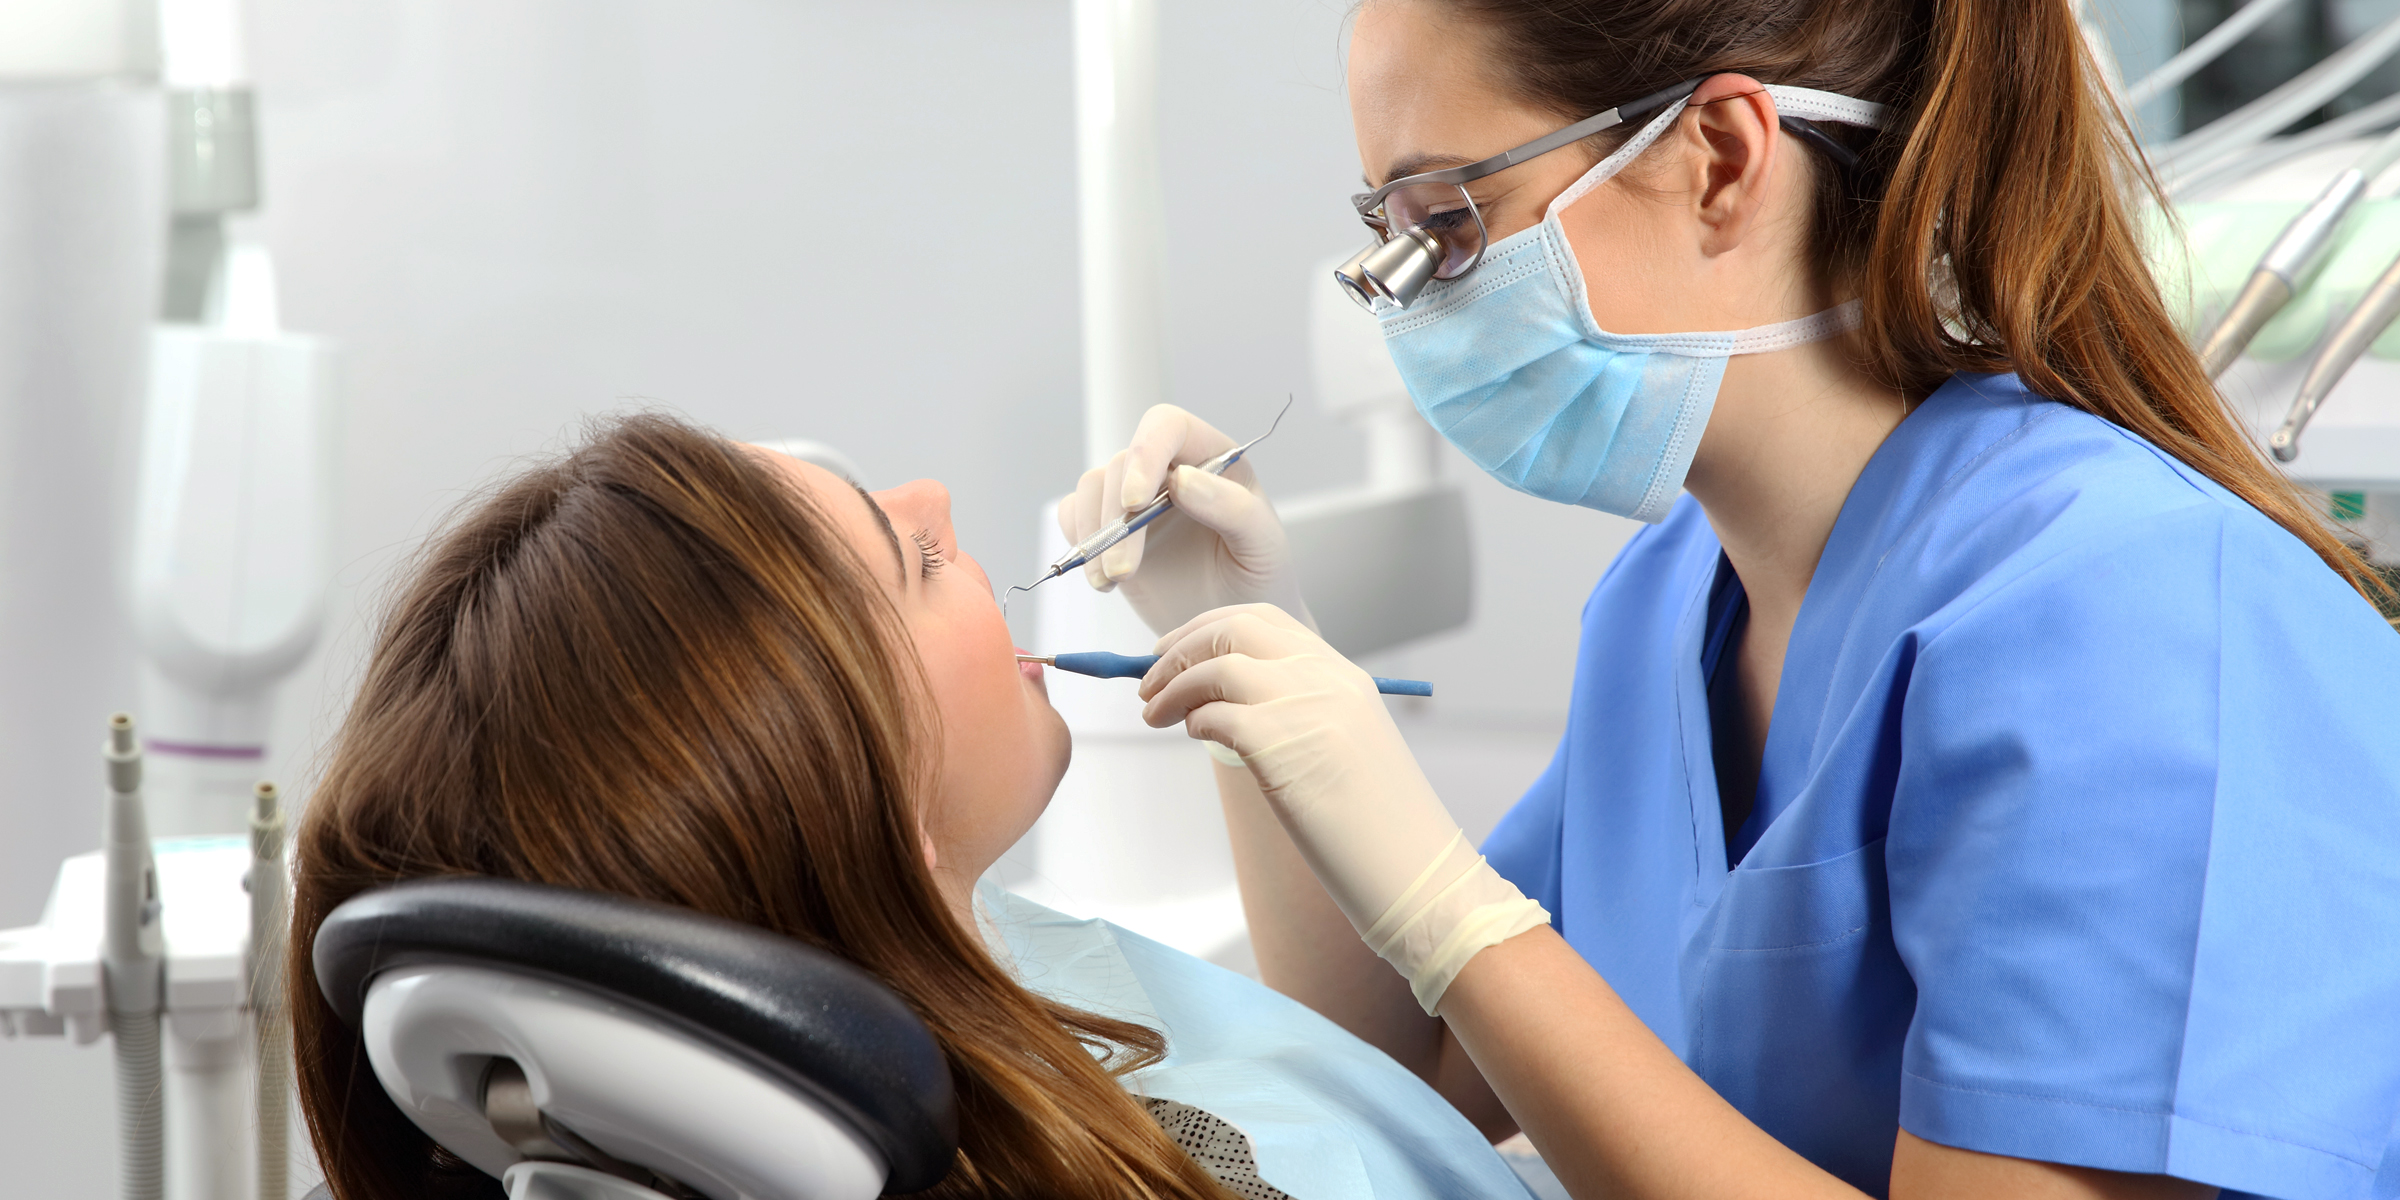 A dental hygienist examining a patient | Source: Shutterstock